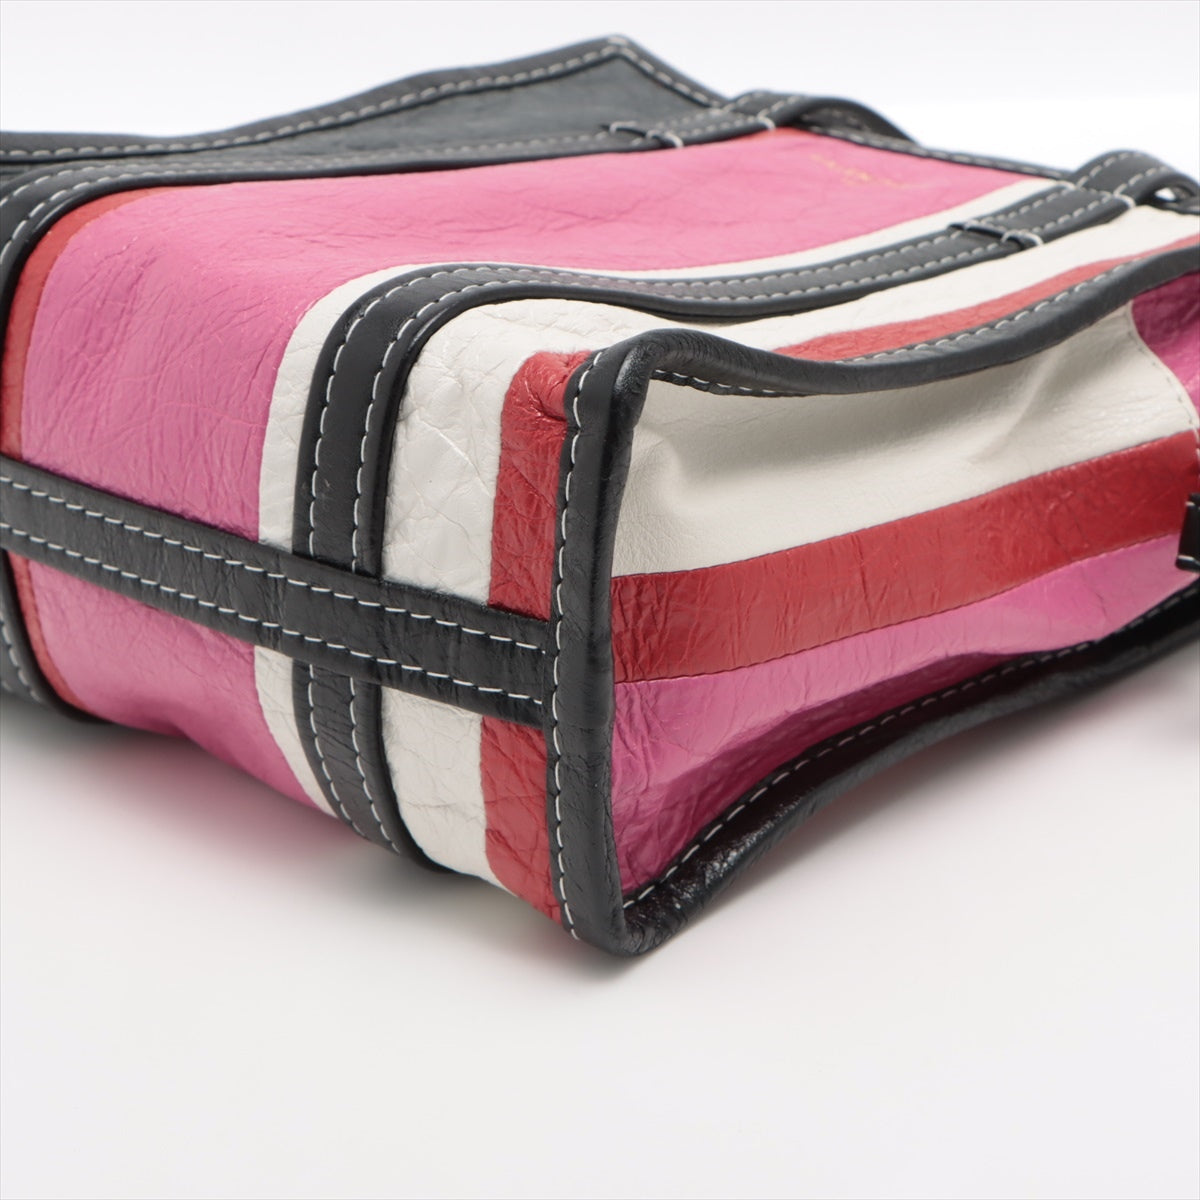 Balenciaga Bazaar shopper XS Leather 2 Way Handbag Multicolor 452458